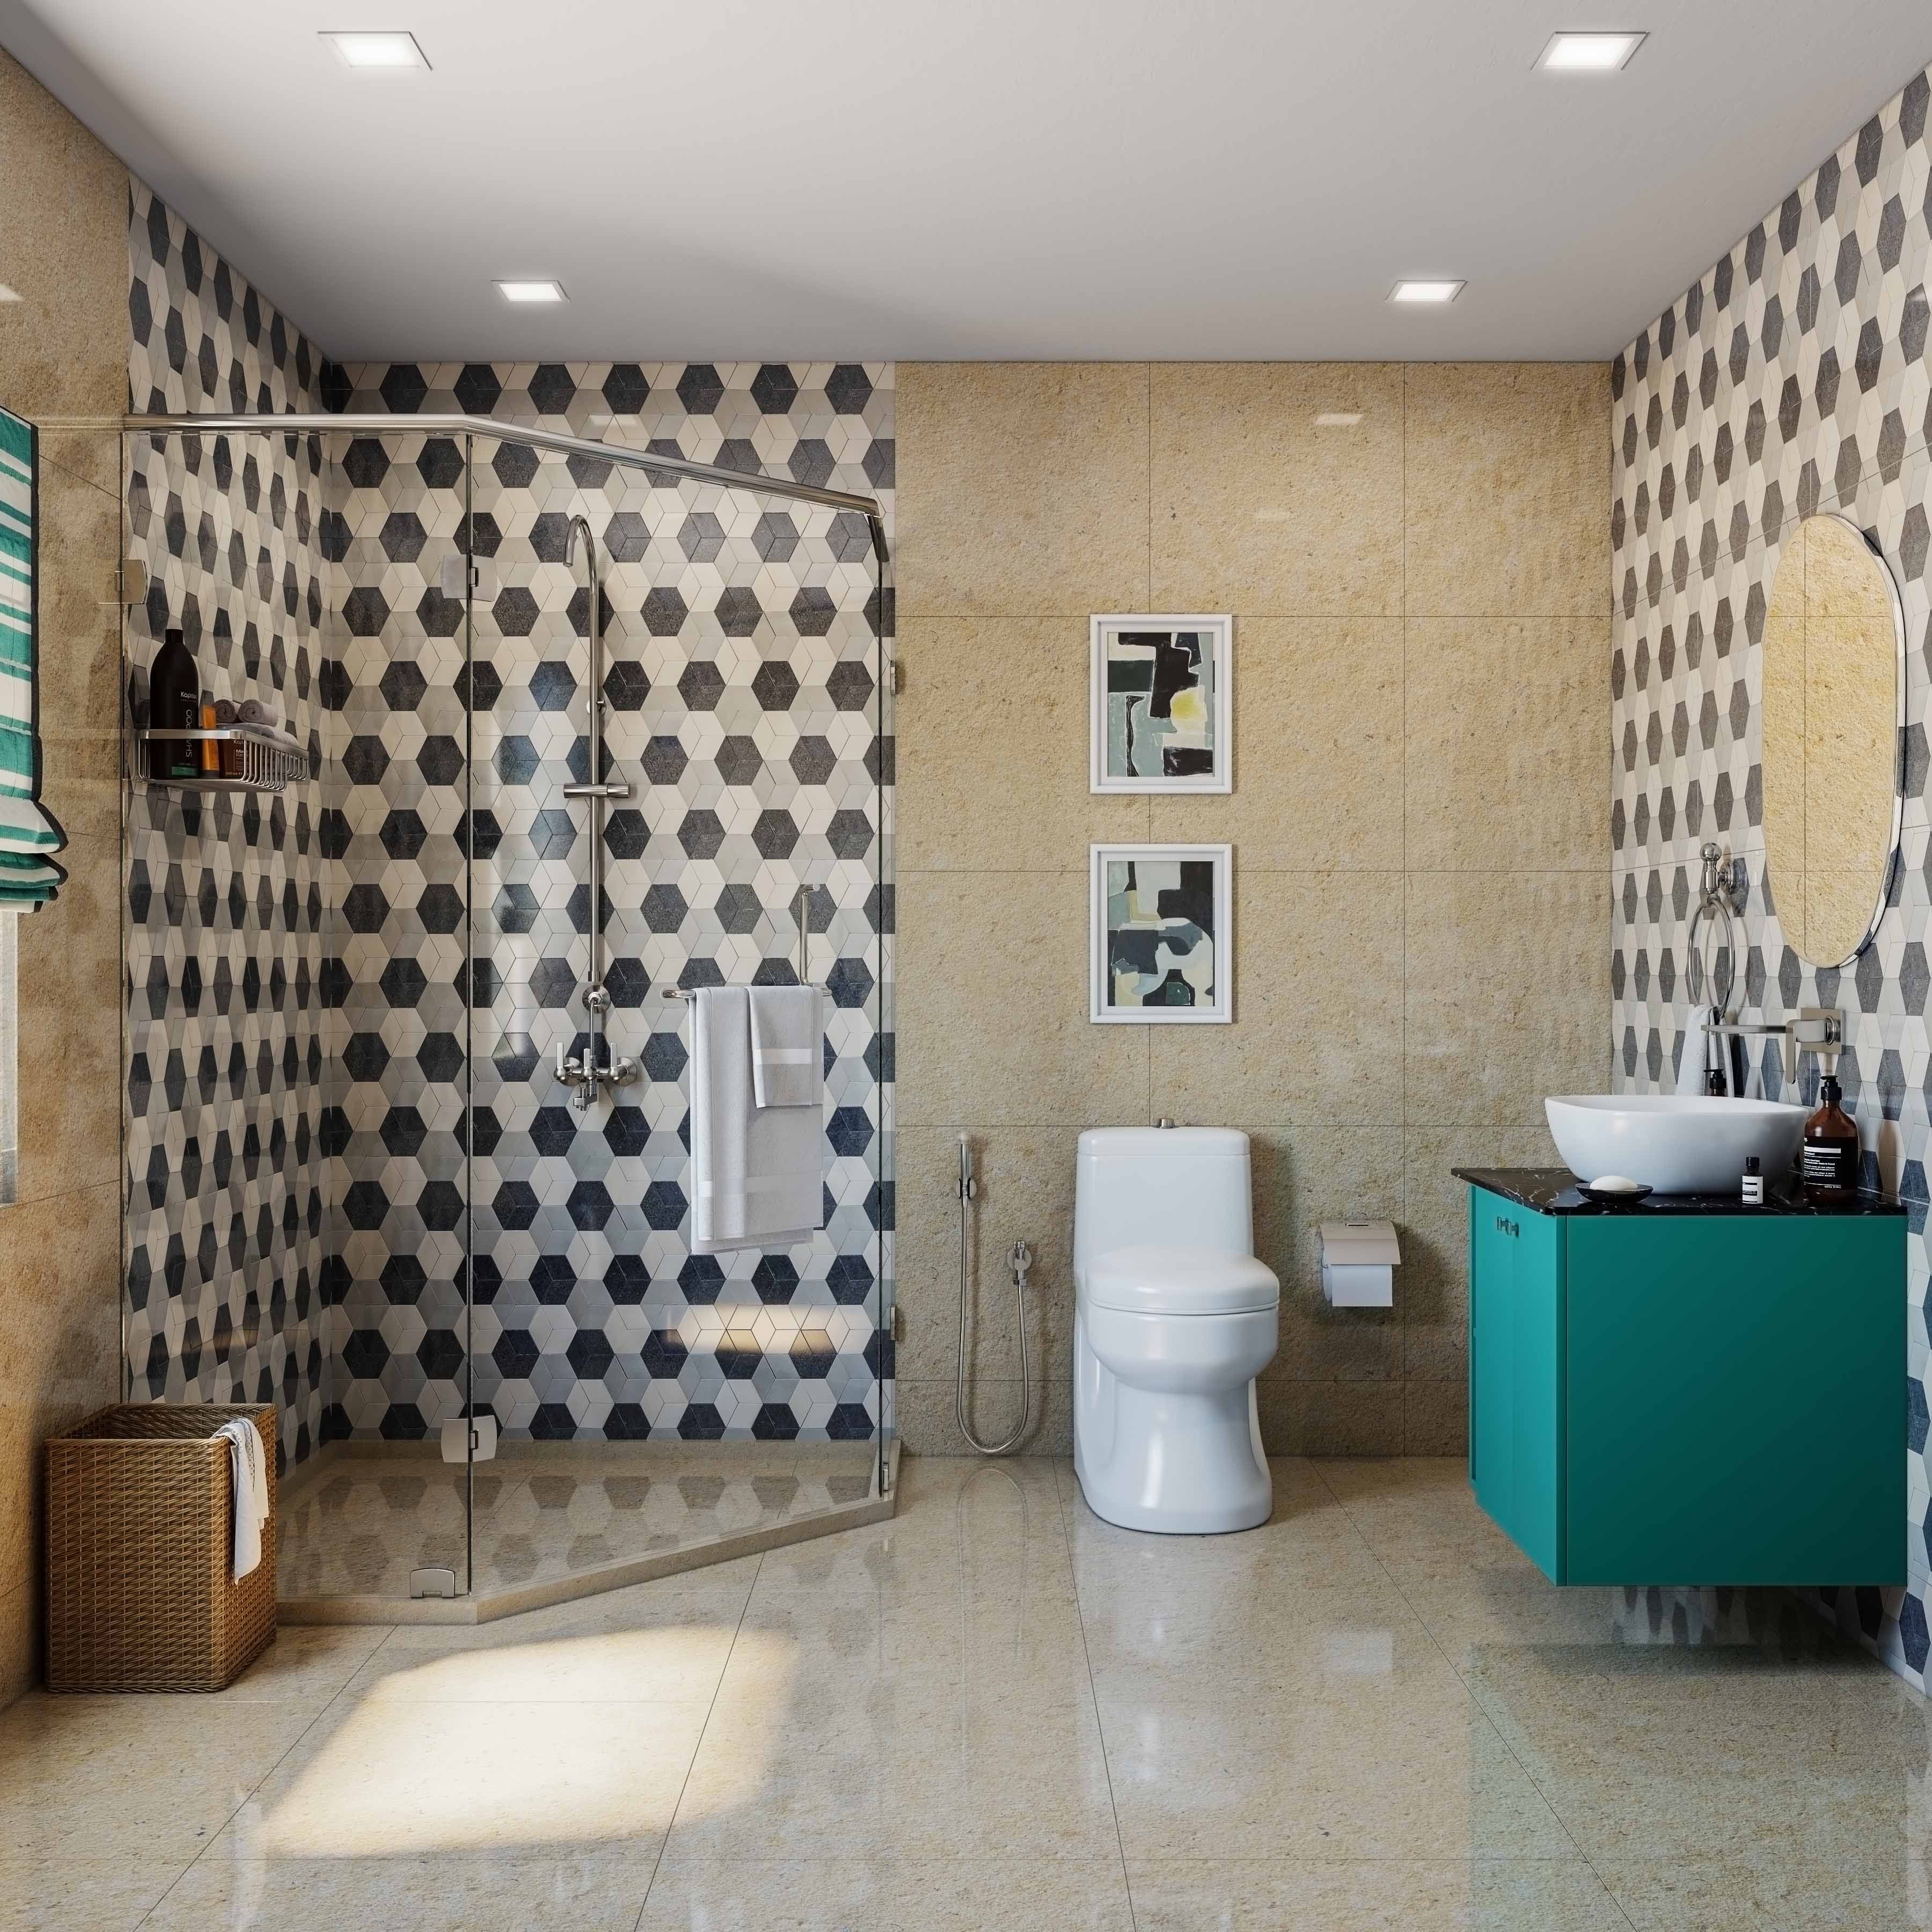 Semi-Glossy Hexagonal Moroccan Ceramic Bathroom Tile Design